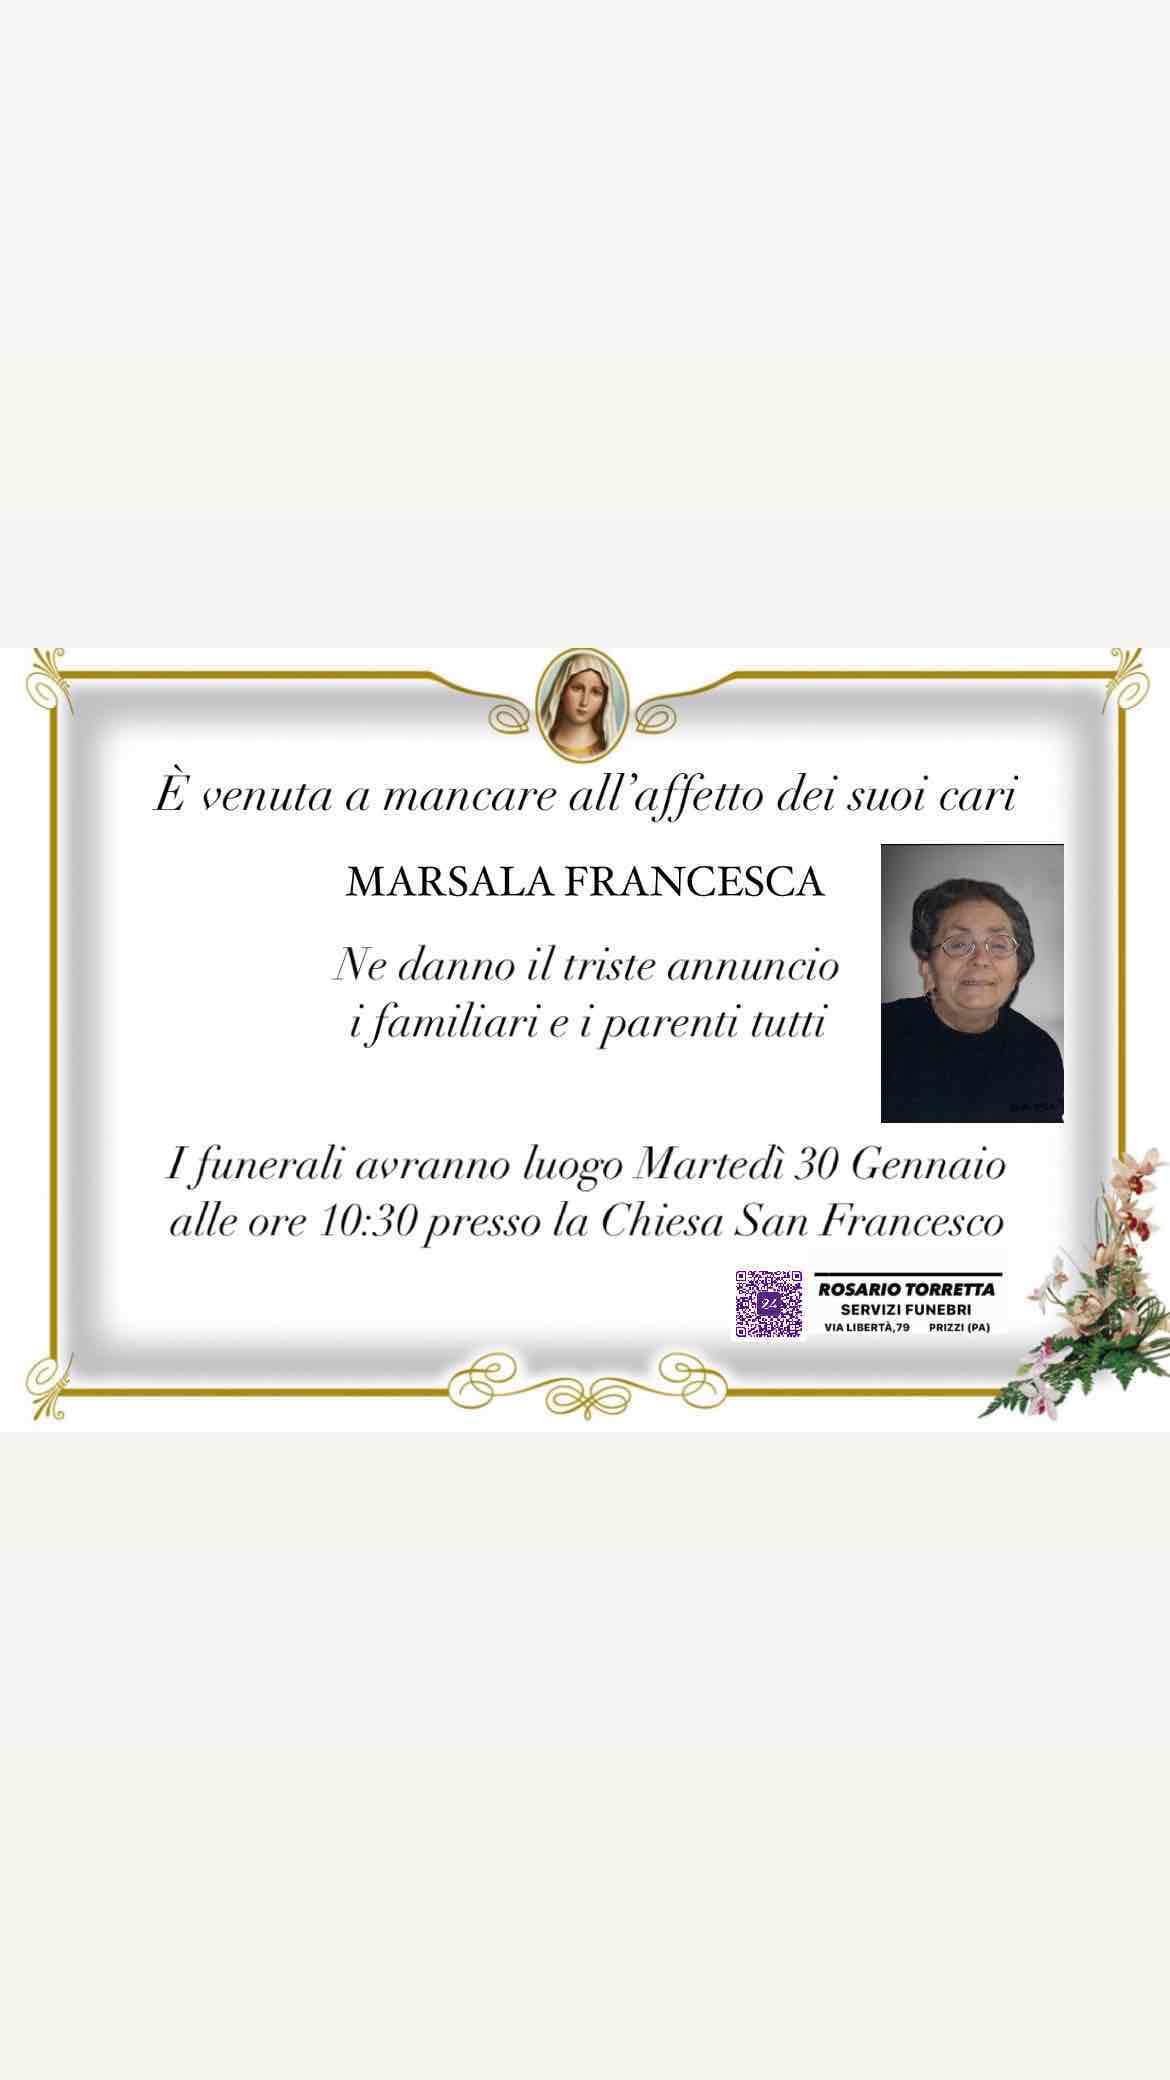 Francesca Marsala